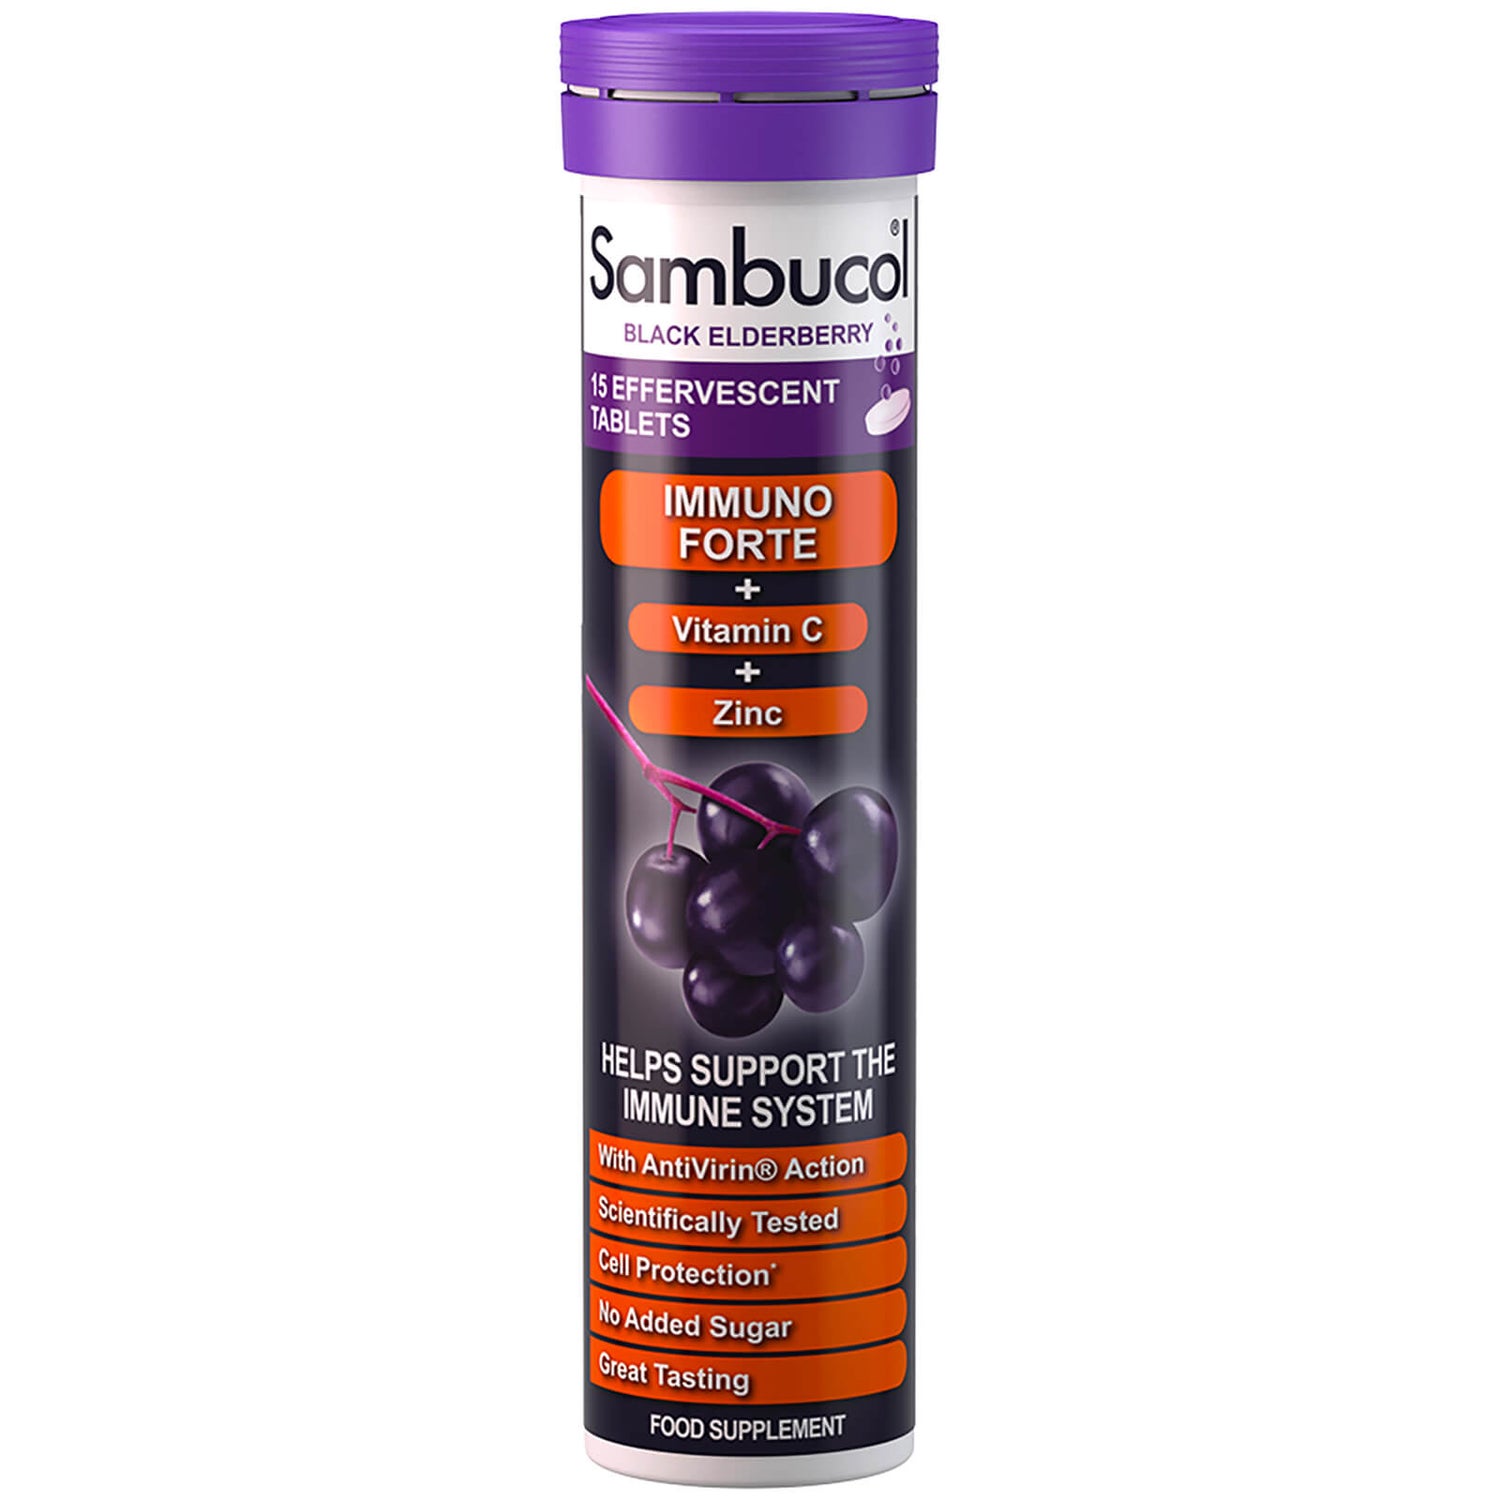 Sambucol Inmuno Forte efervescente (15 tabletas)